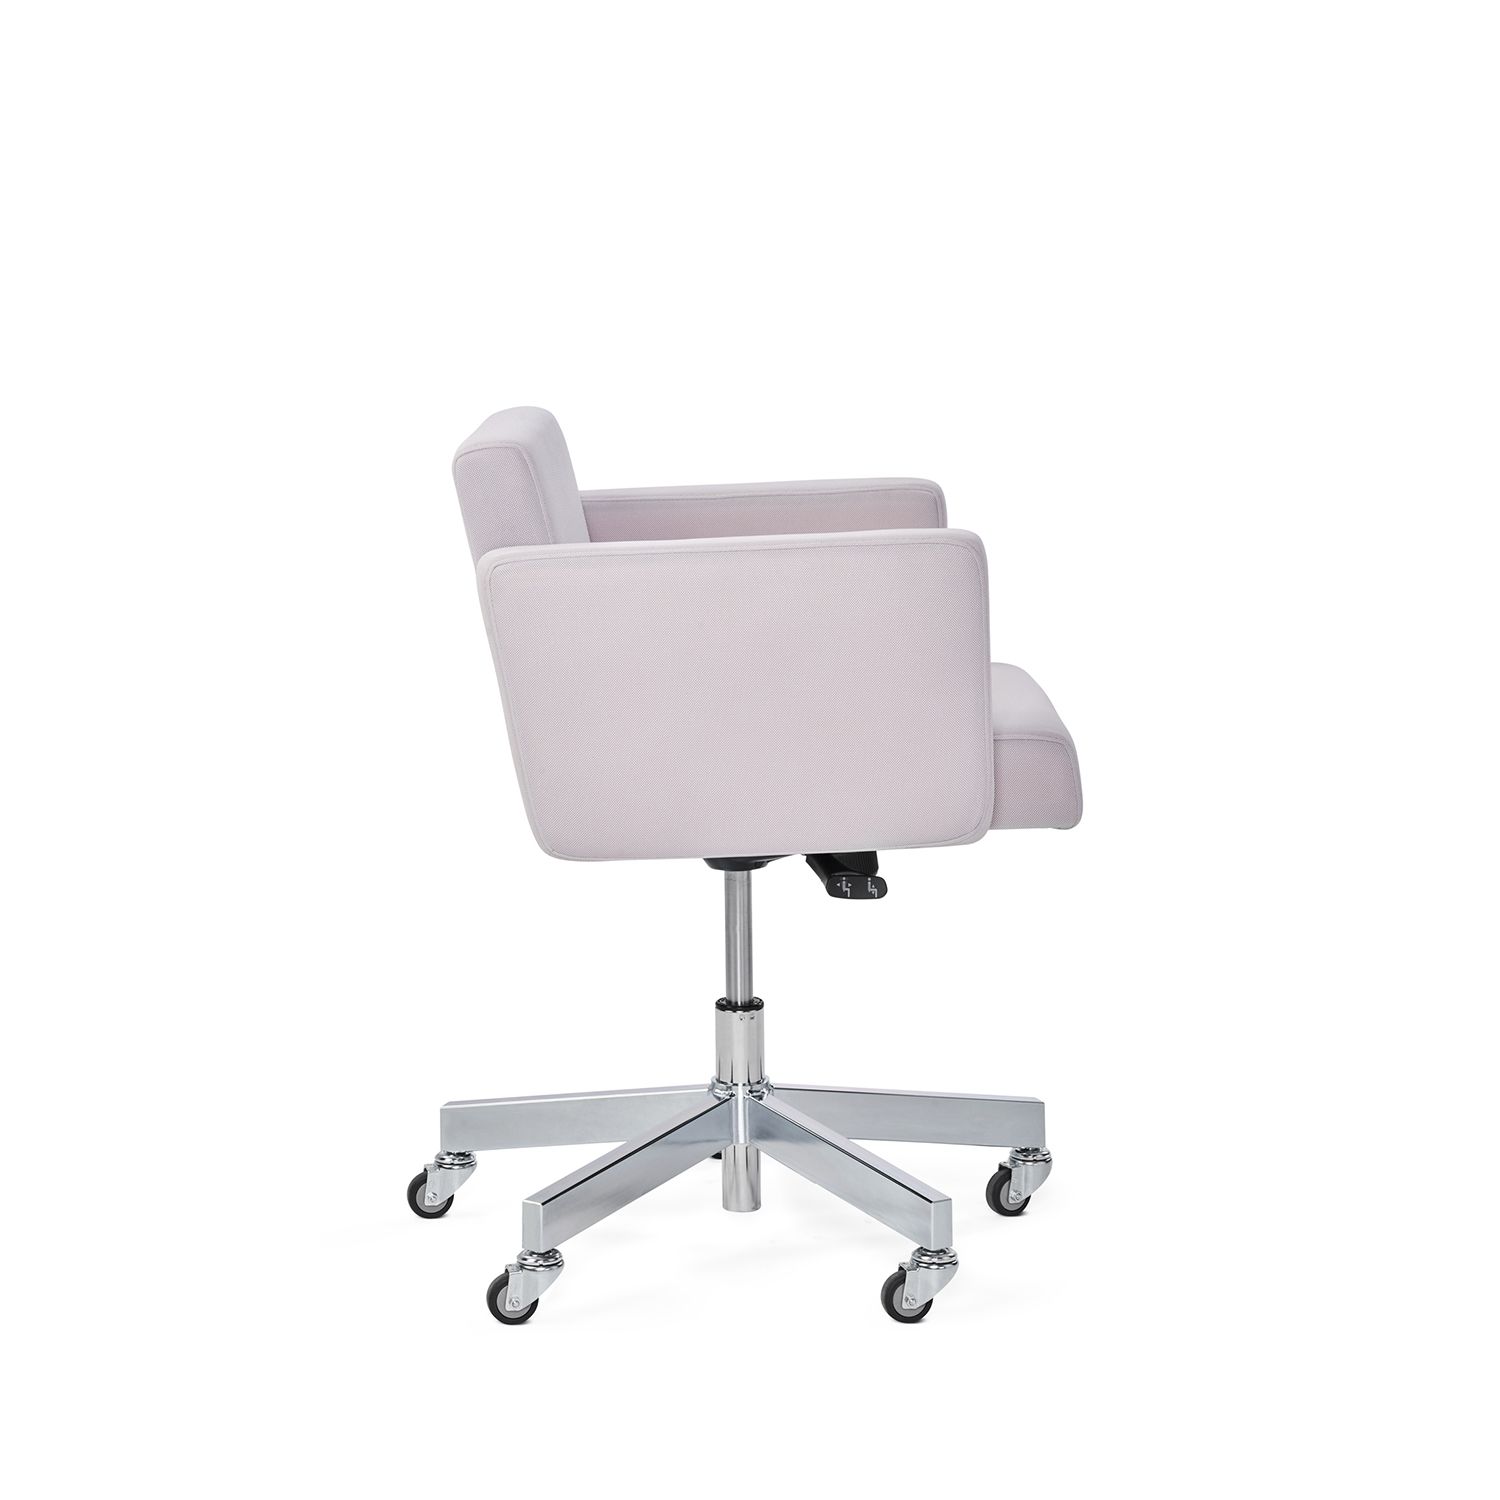 avl office chair